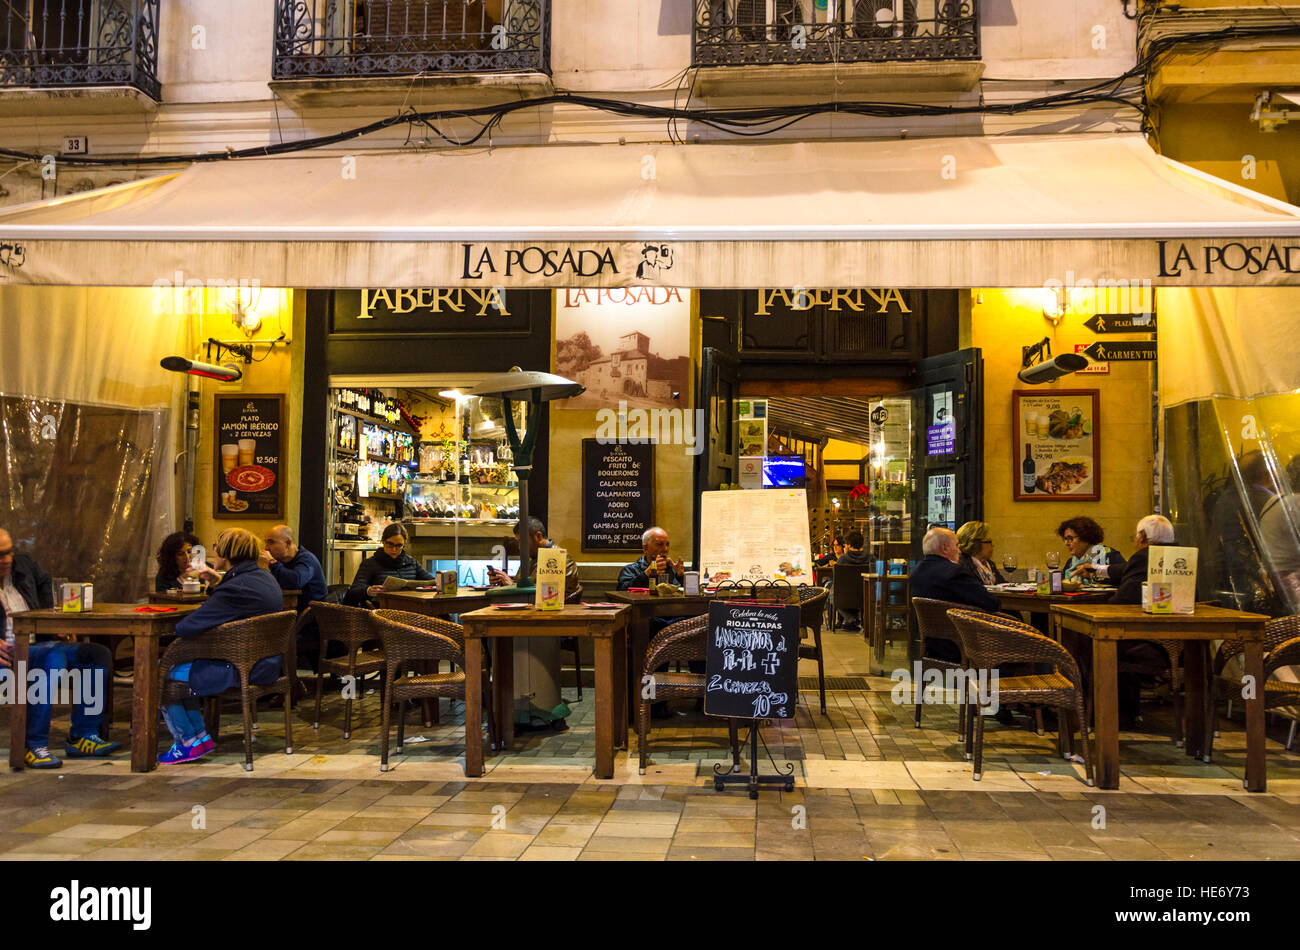 Taberna, La posada, typical spanish tapas bar in centre of Malaga at night,  Malaga, Andalusia, Spain Stock Photo - Alamy